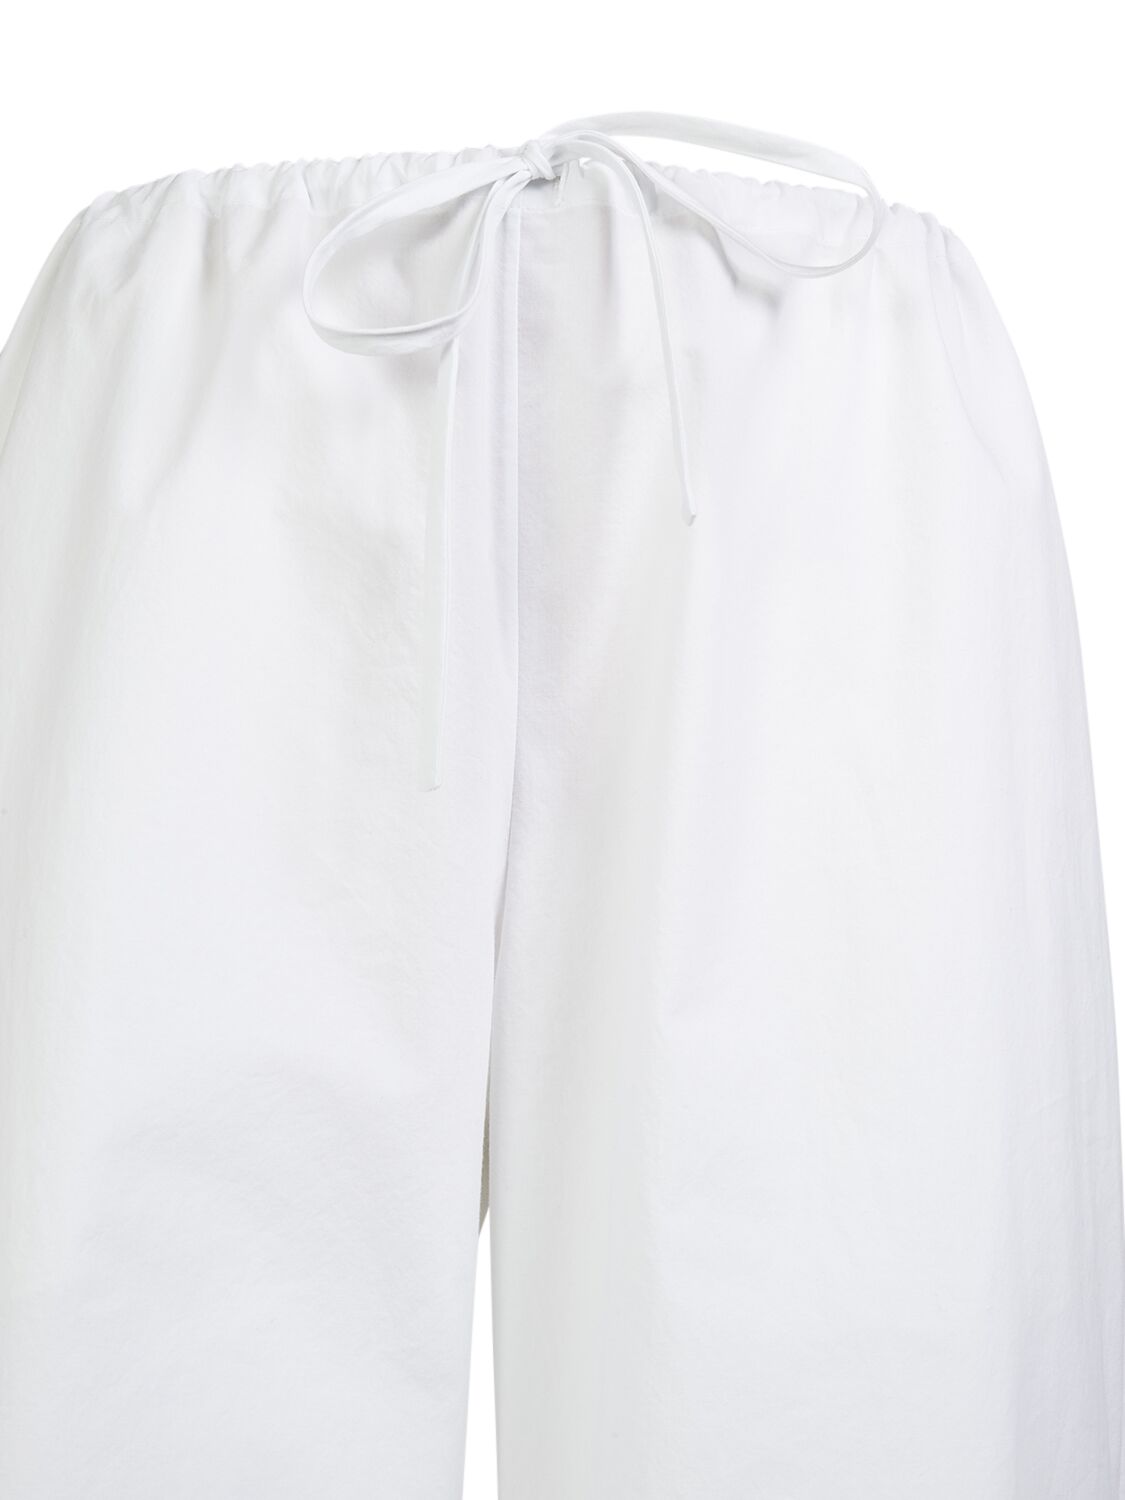 Shop The Row Jugi Poplin Straight Pants In Off White